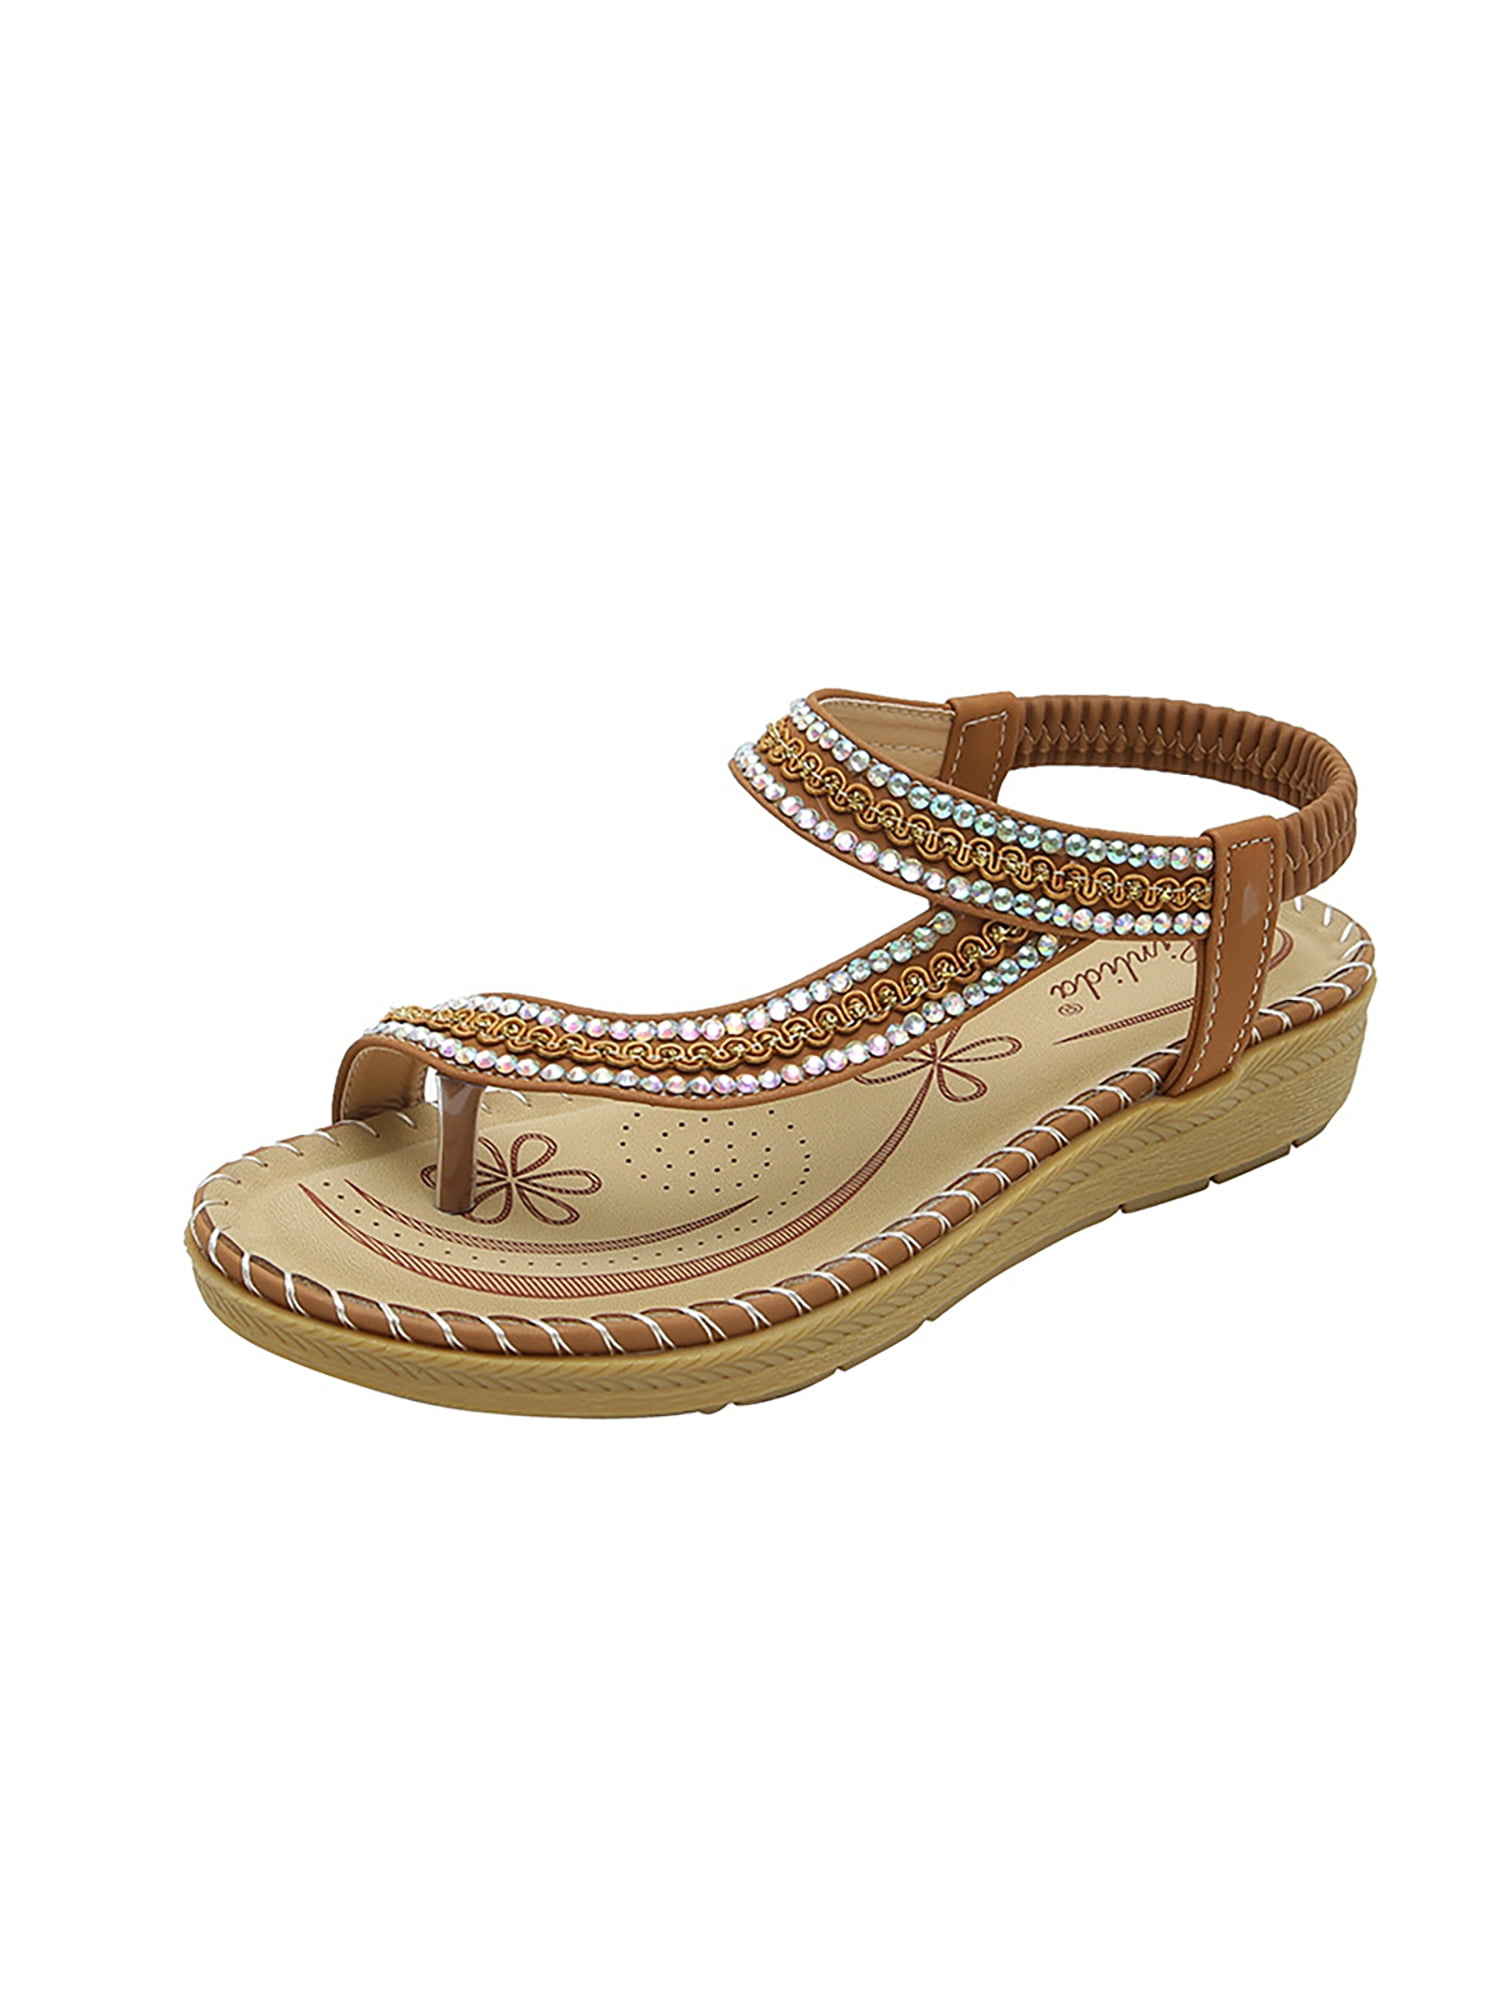 Womens Diamante T-Bar Flats Ladies Summer Sandals Slingback Toe Post Shoes Size